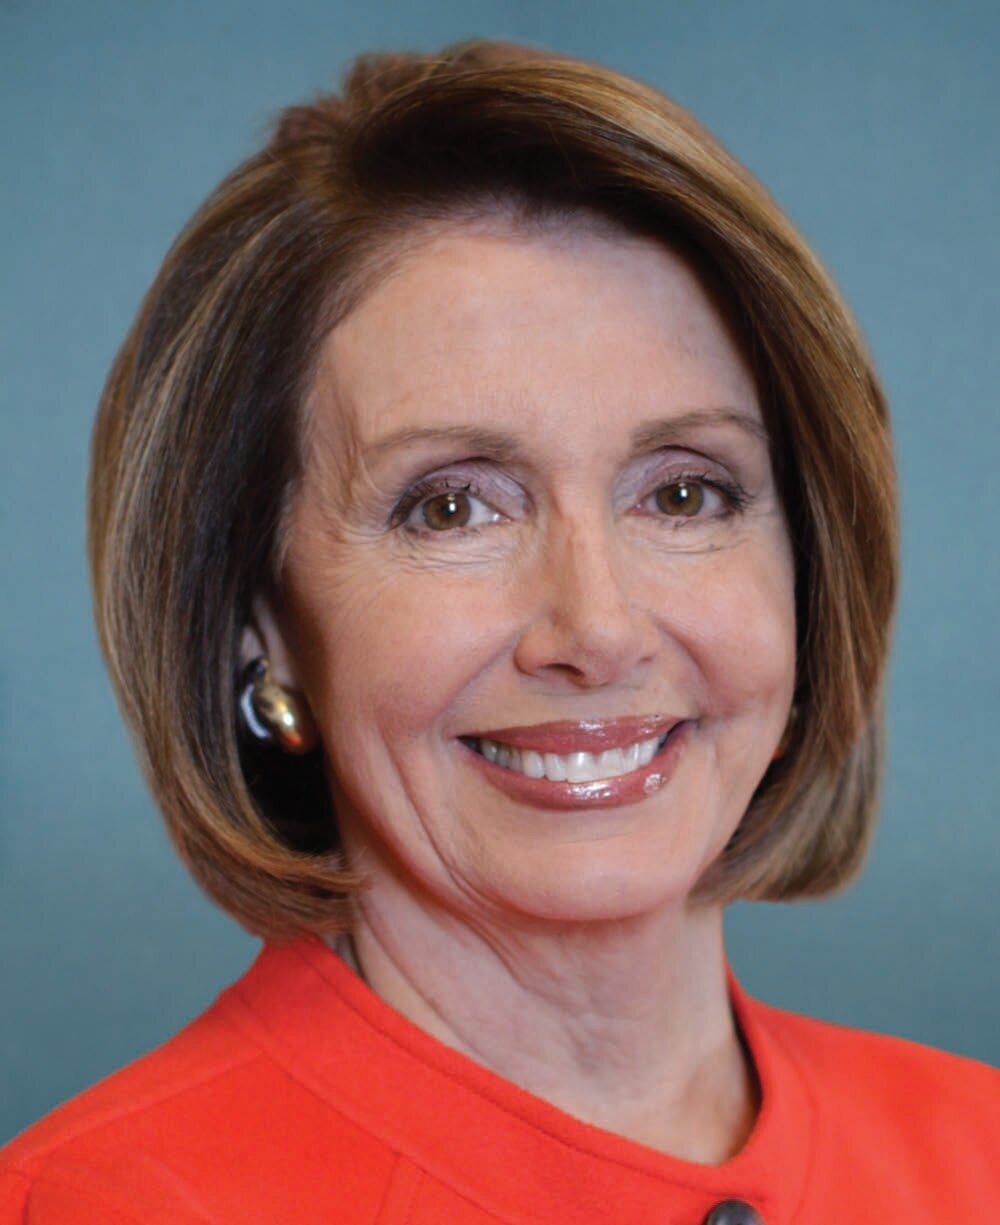 Nancy_Pelosi,_official_photo_portrait,_111th_Congress (c)Federal Government.jpg